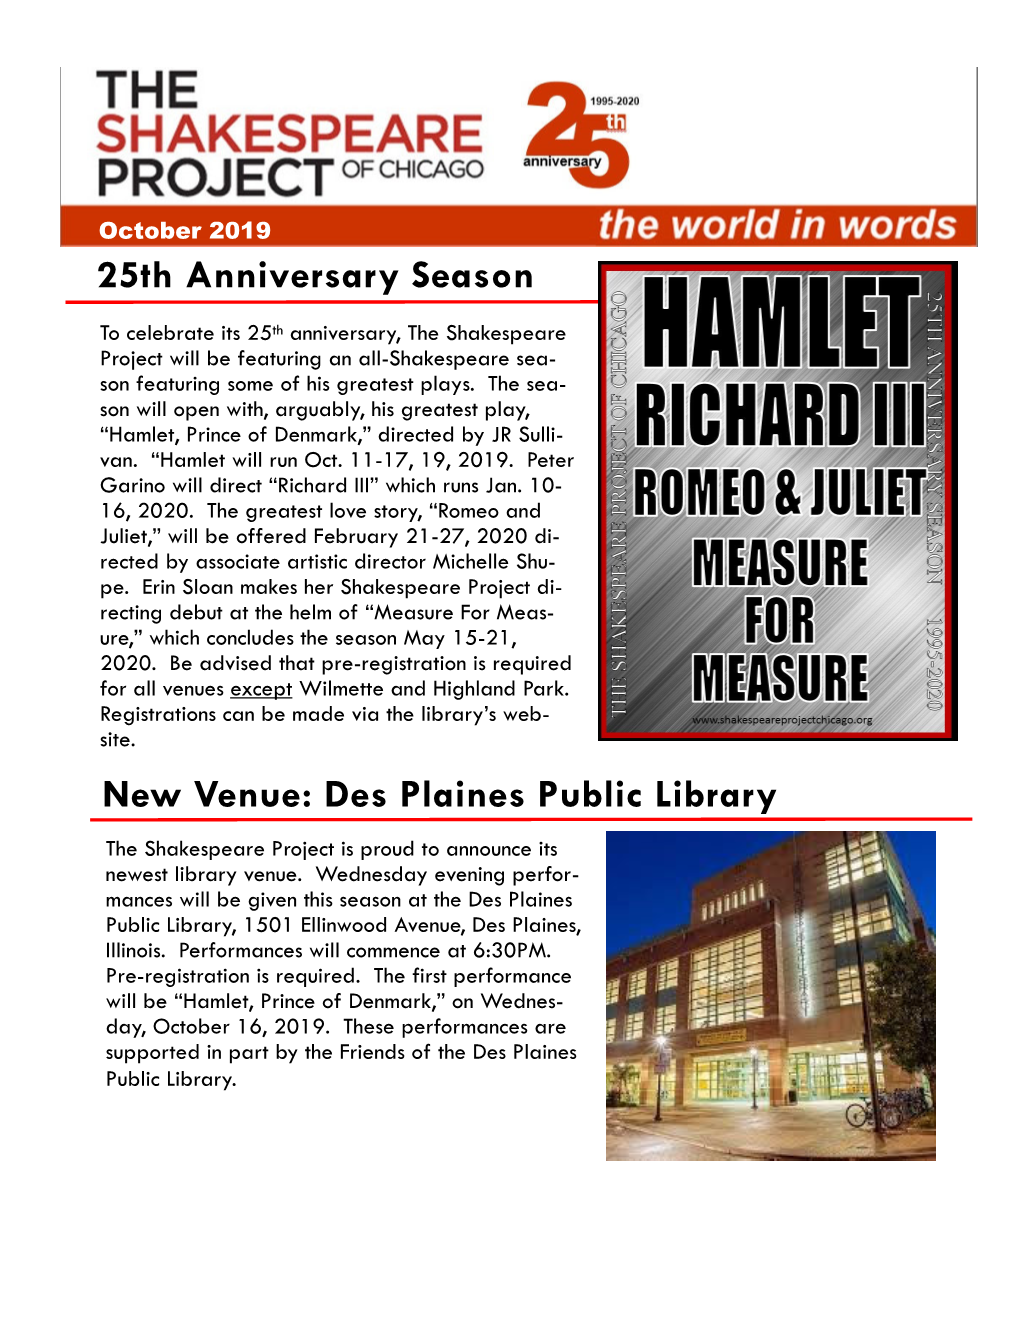 25Th Anniversary Season New Venue: Des Plaines Public Library